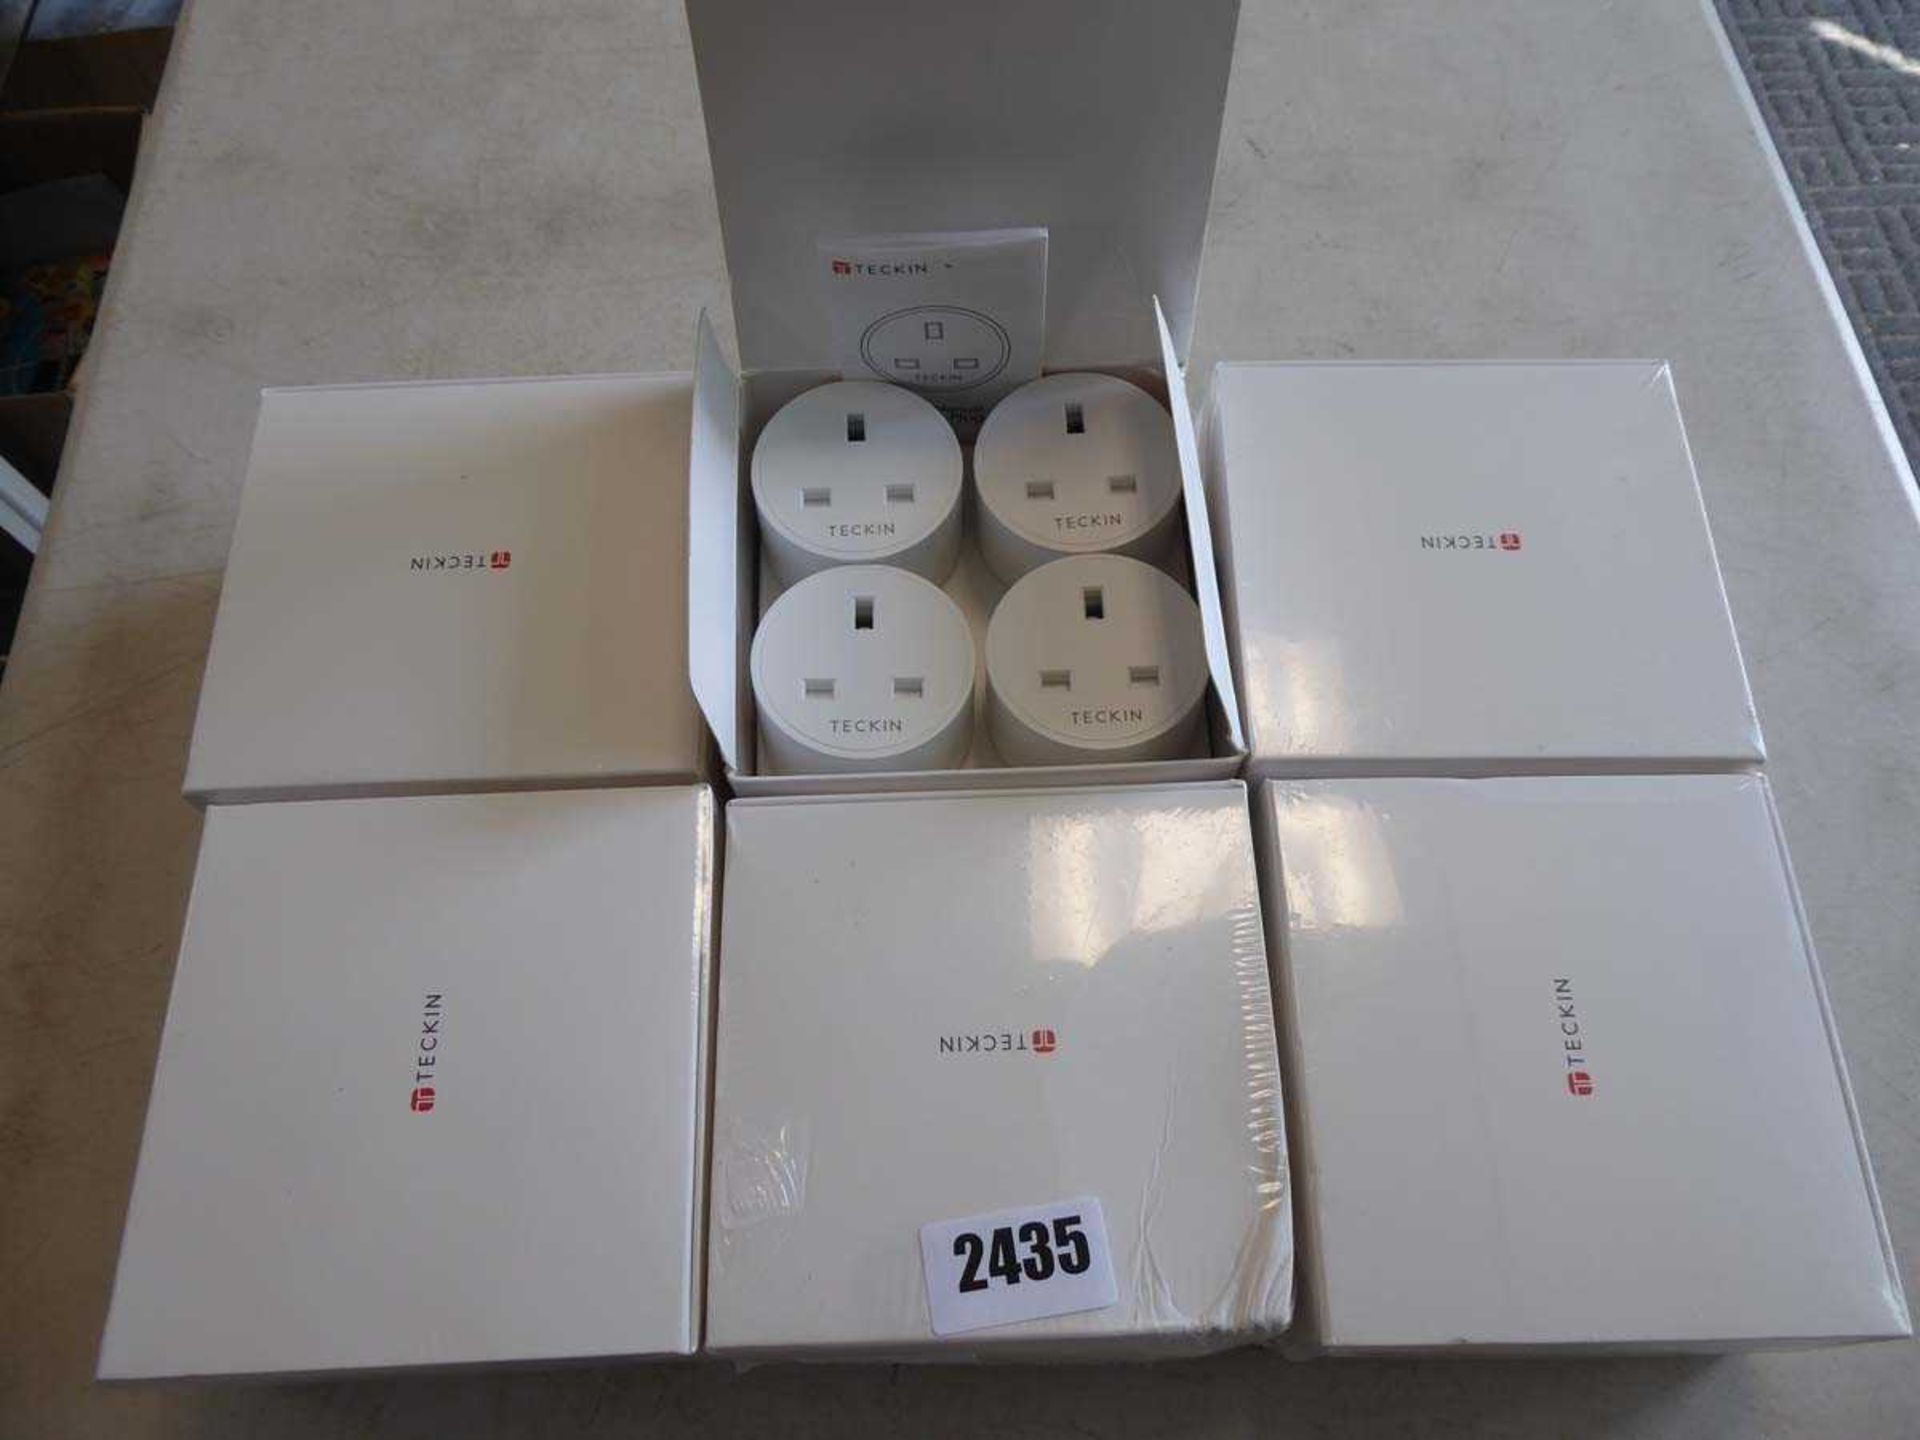 6 boxes of Teckin smart plugs